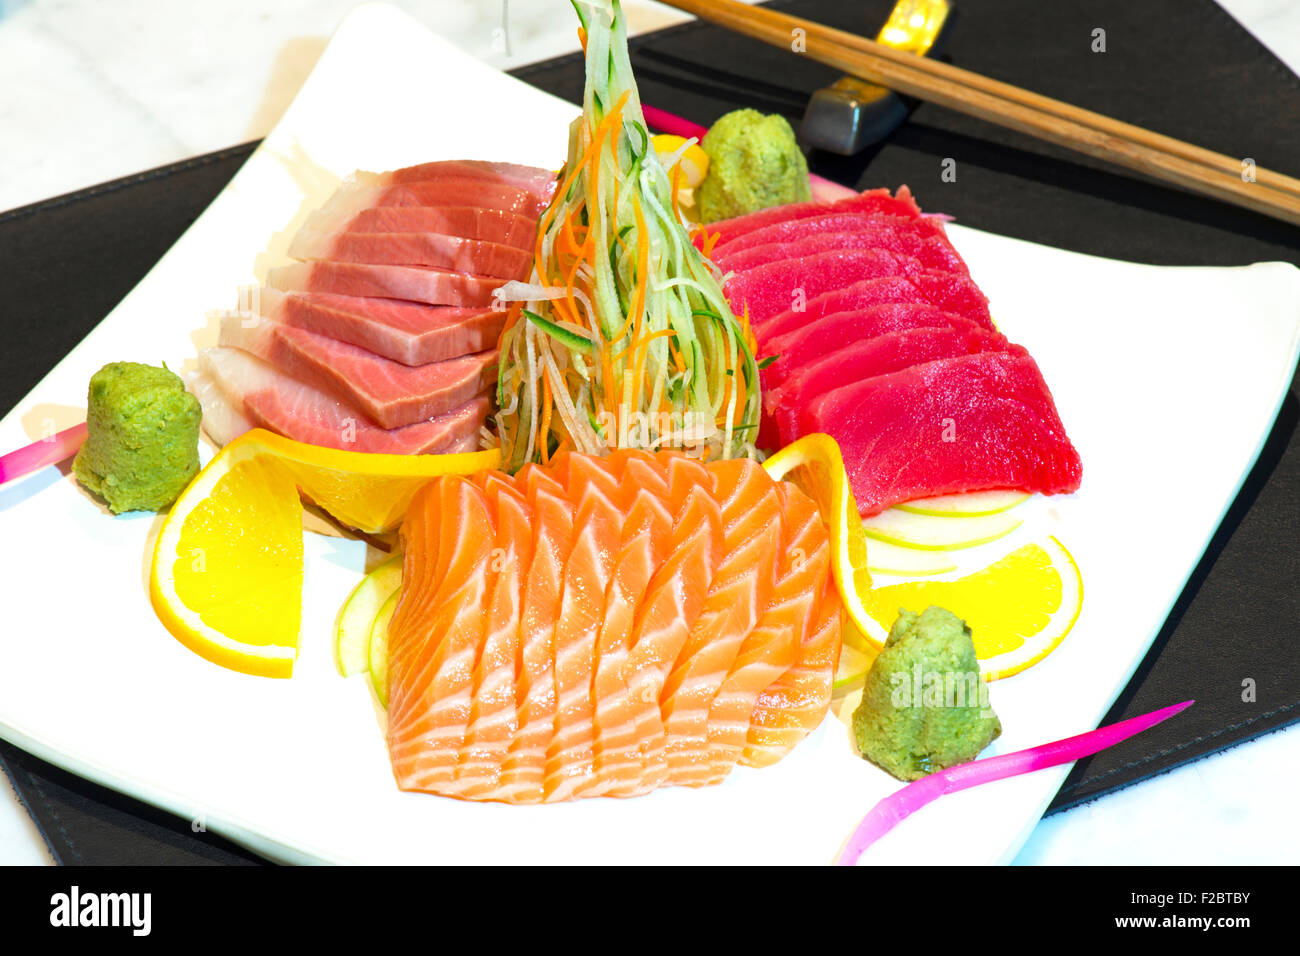 Japanese raw fish dish with very nice arrangement Stock Photo